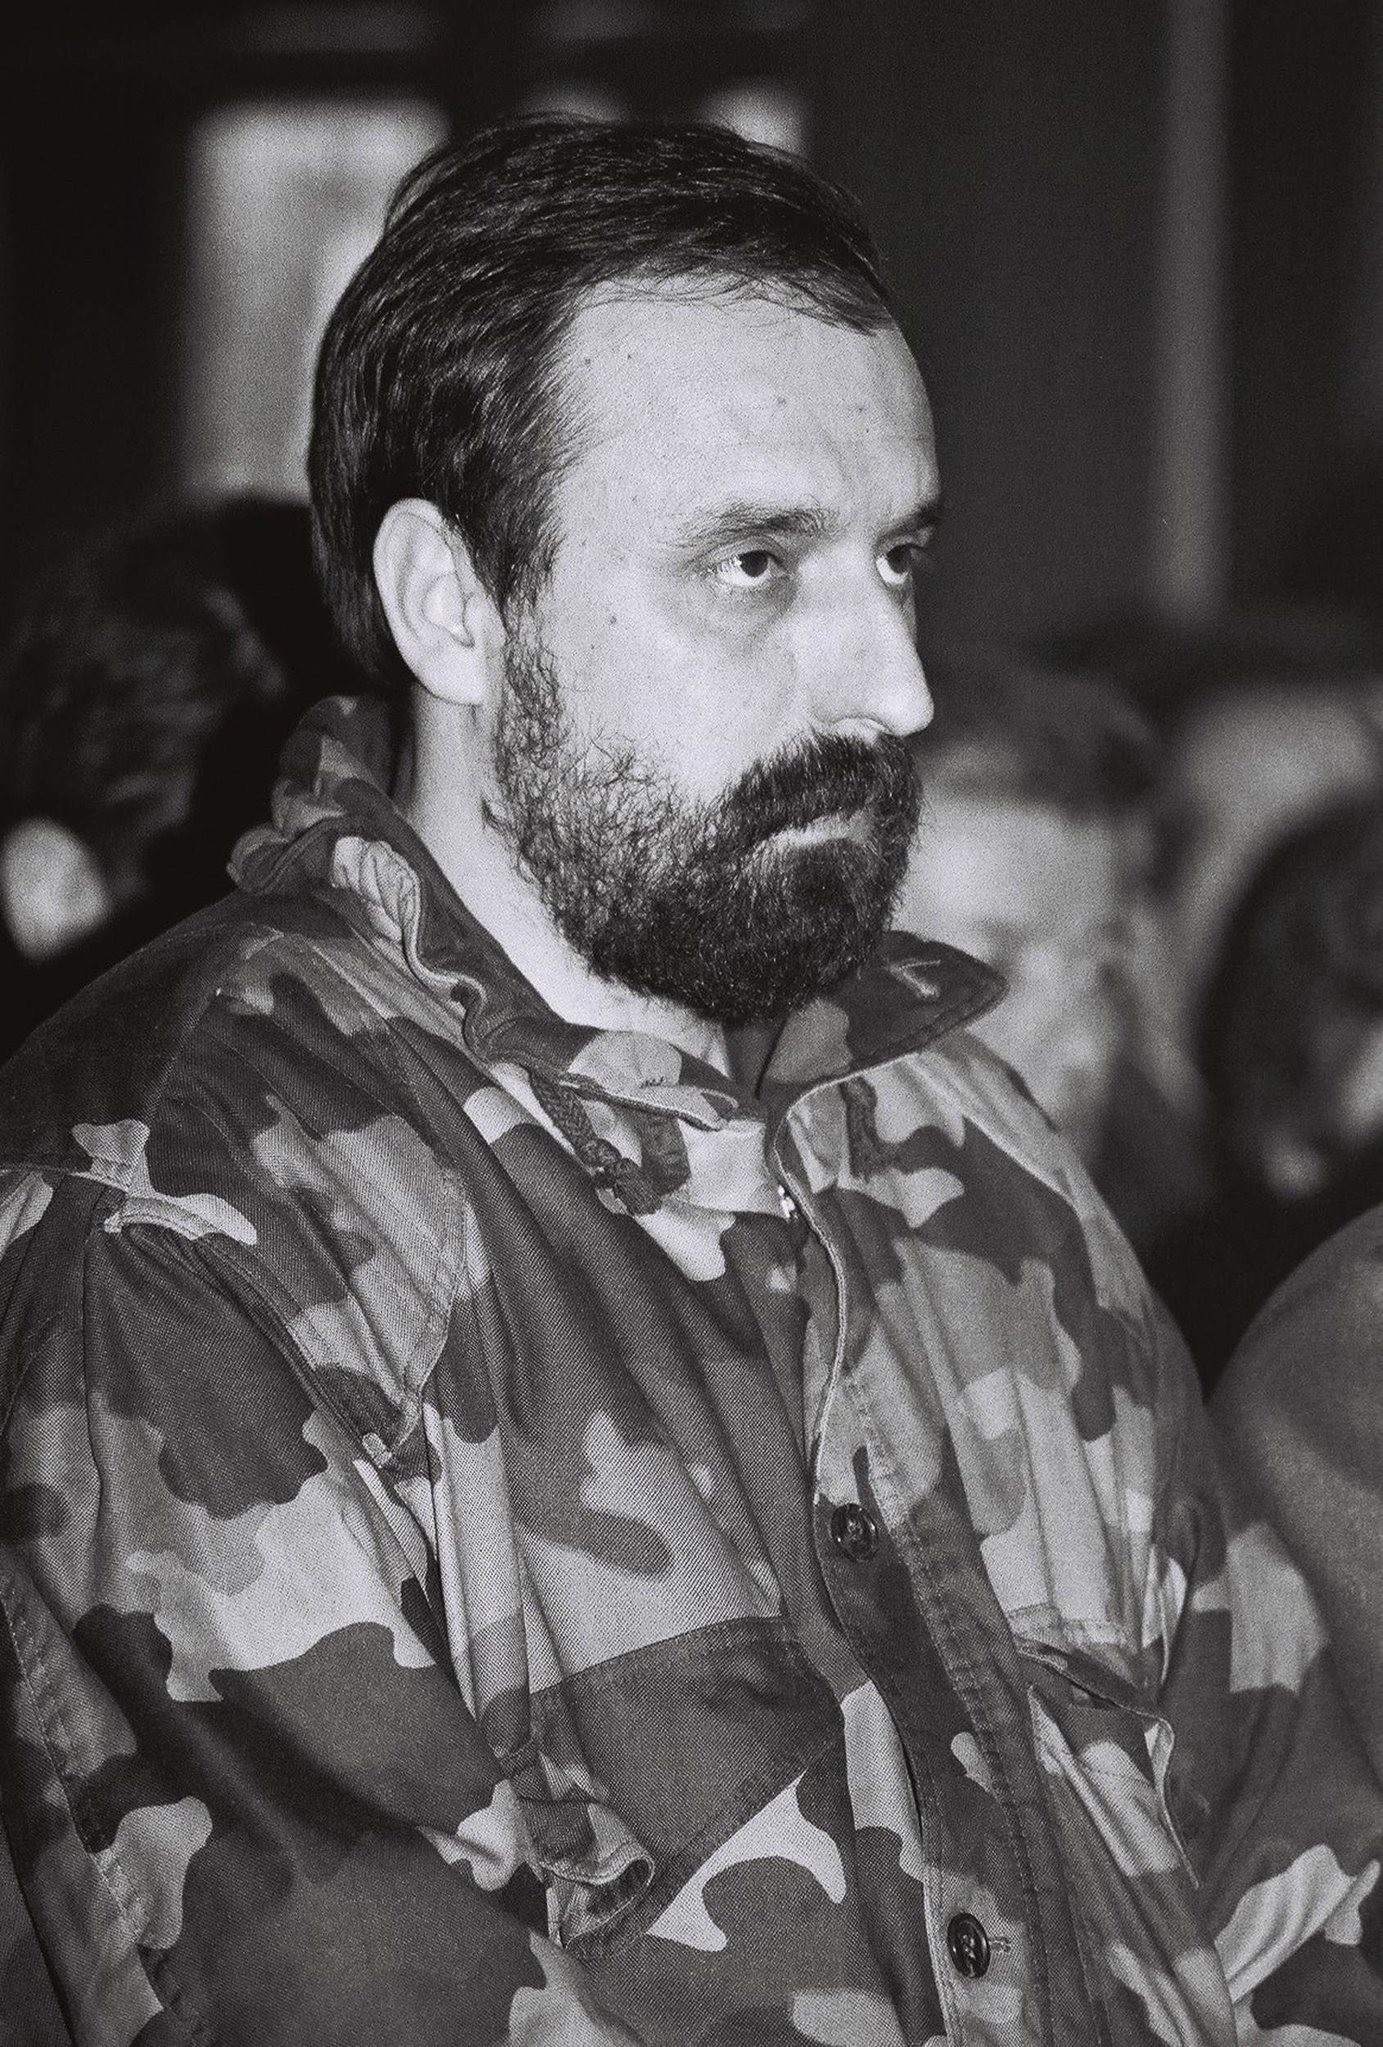 Goran Hadzic attends a Serb Republic of Krajina's Parliament session in Okucani in this April 20, 1993 file photo. (Reuters Photo)